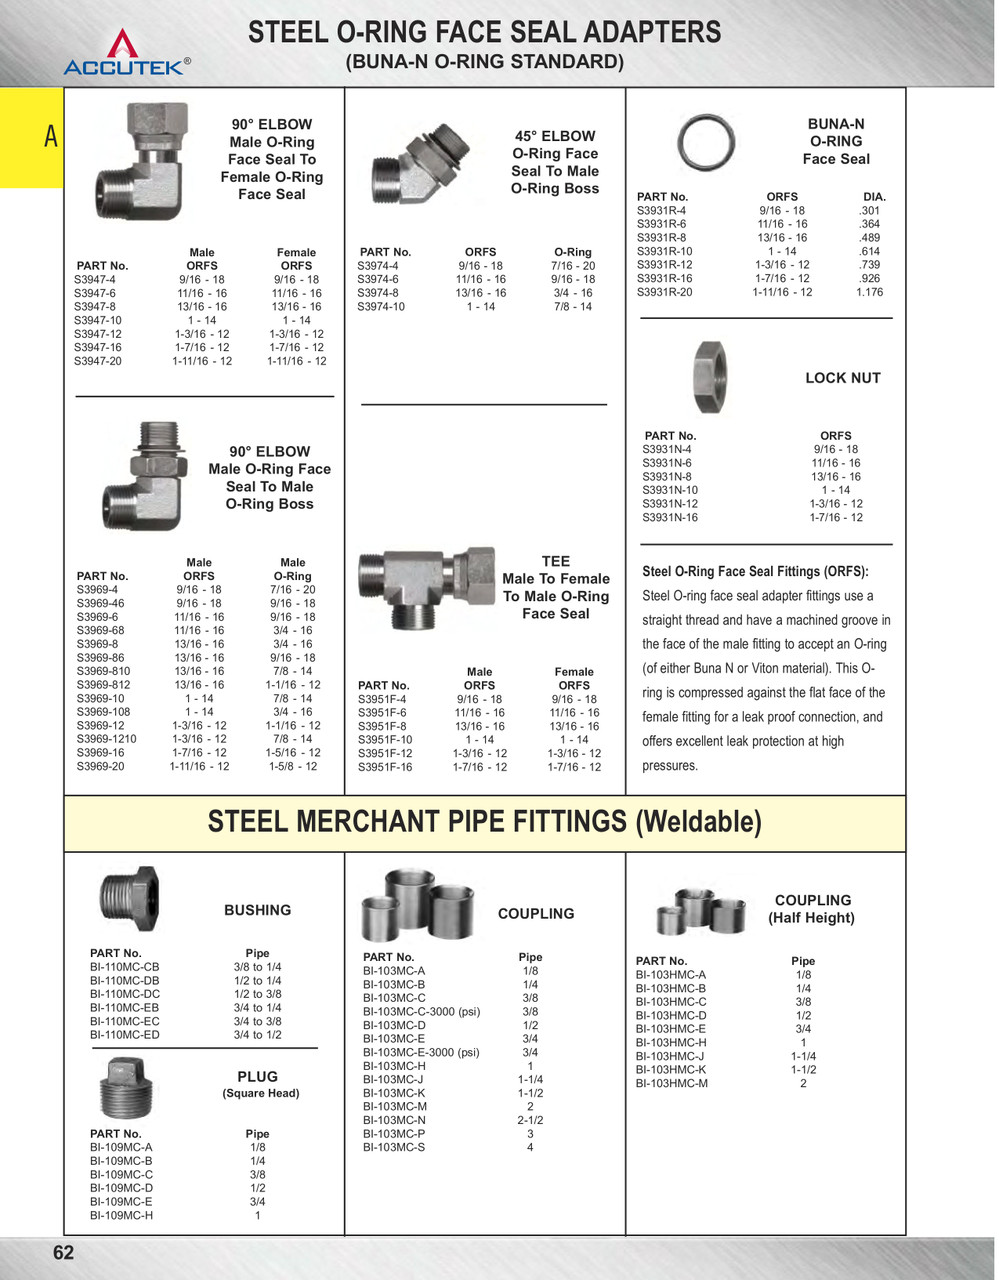 3/4 x 1/2" Steel Male NPT - Female NPT Reducing Hex Bushing  BI-110MC-ED